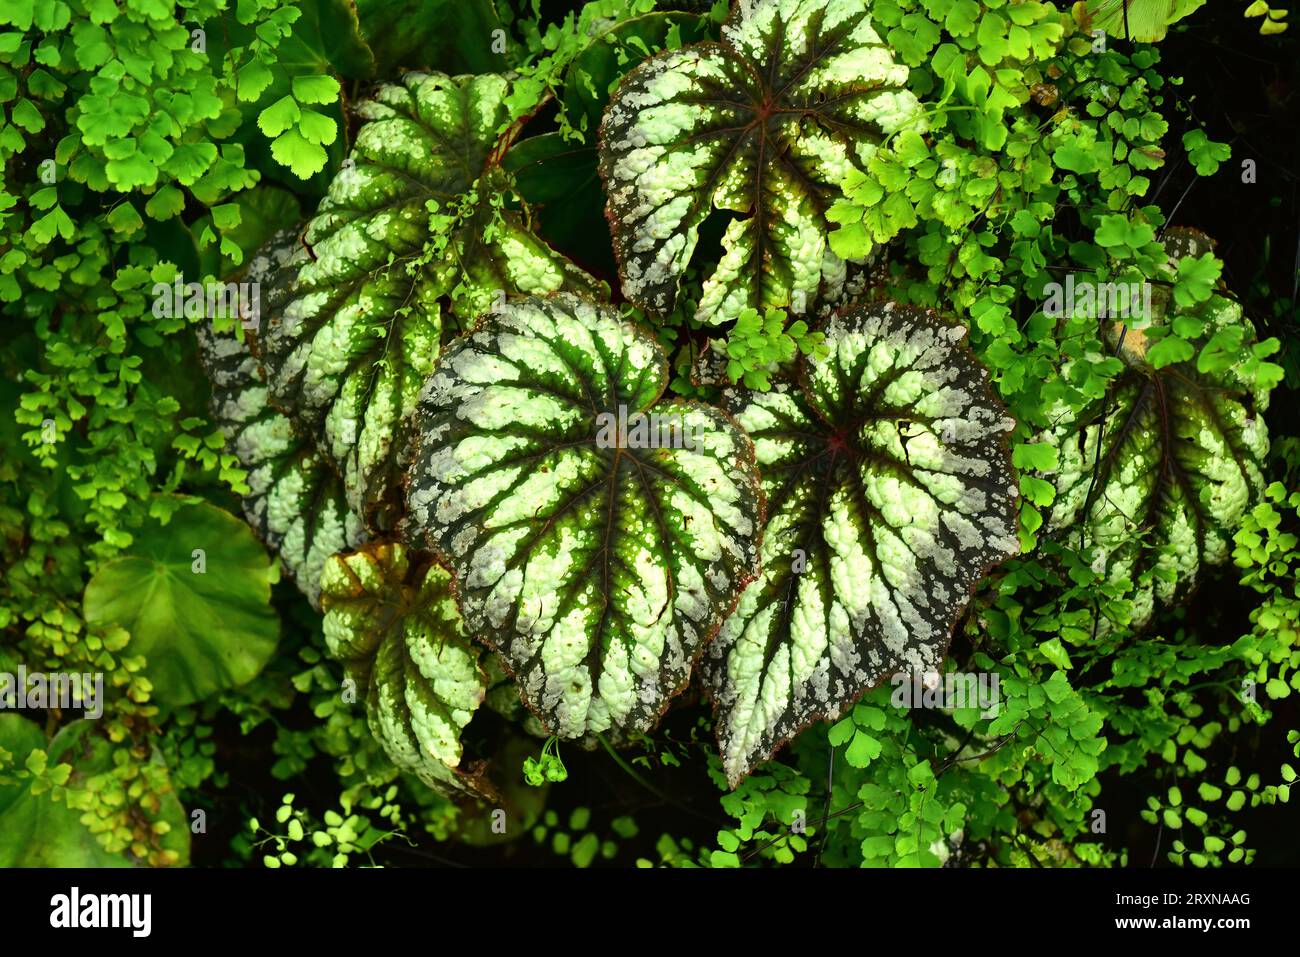 Begonia rex is an ornamental perennial plant native to tropical Asia. Around it venus hair fern (Adiantum capillus-veneris). Stock Photo